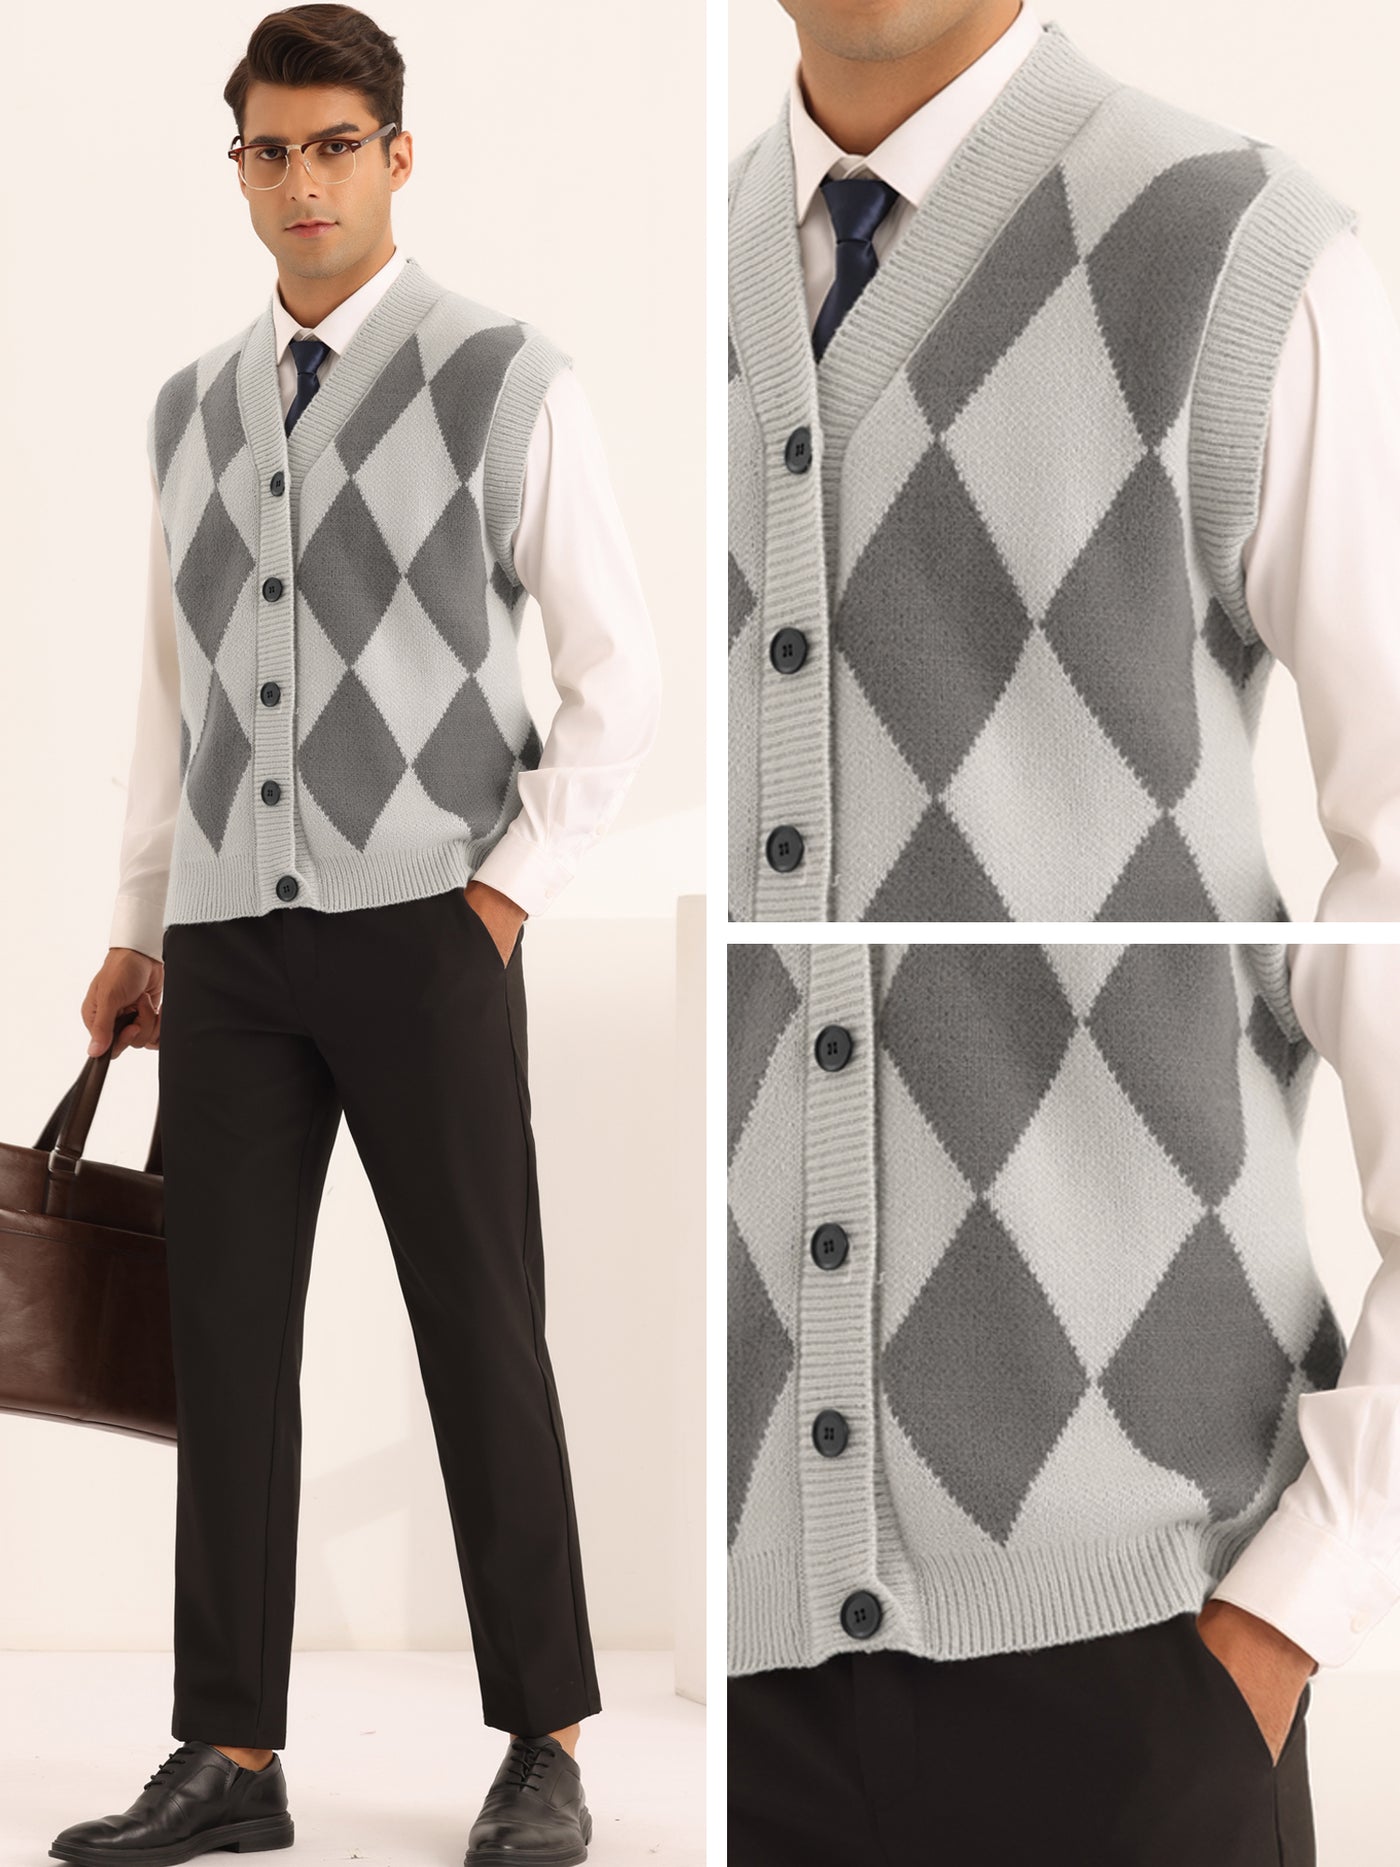 Bublédon Men's Classic V Neck Button Sleeveless Knit Sweater Cardigan